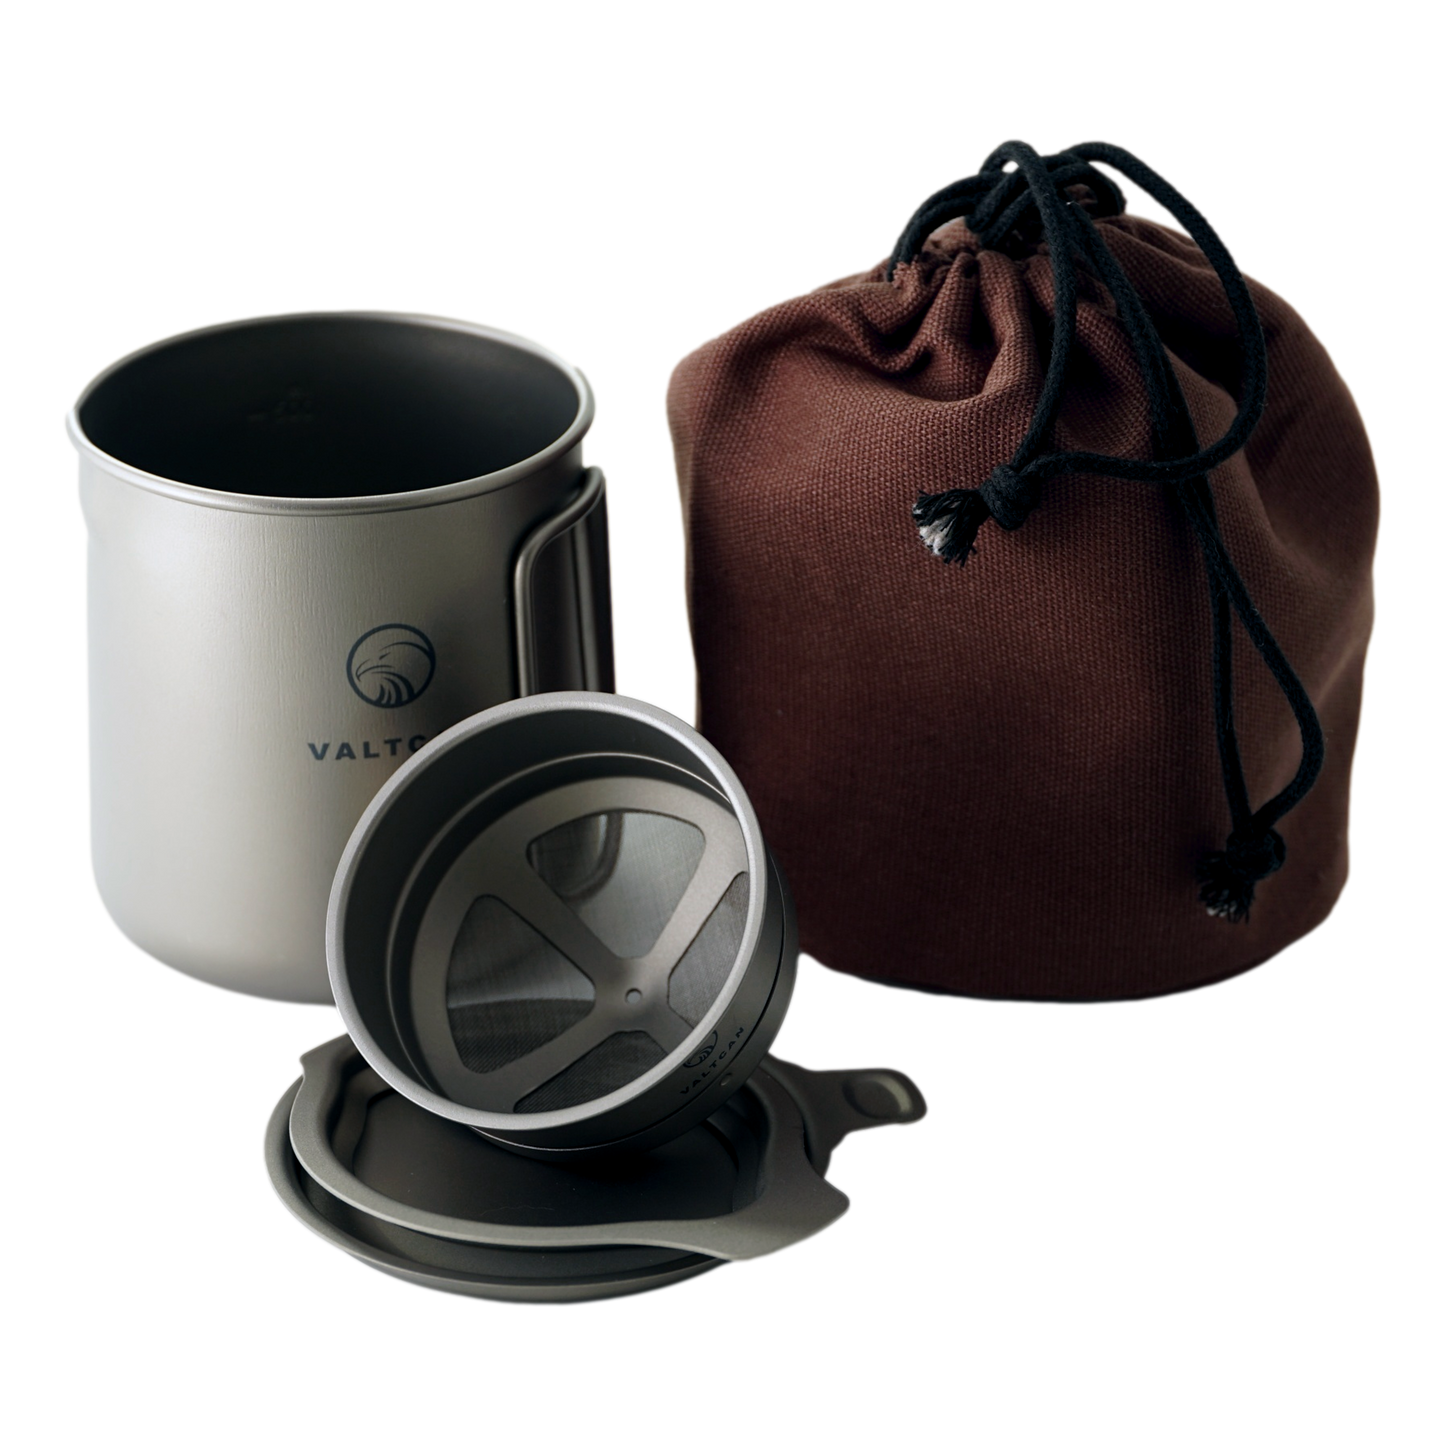 Valtcan 600ml Titanium Coffee Cup Mug Pot with Drip Pour Over Mesh Brewing System Makes Tea 20 oz 138g